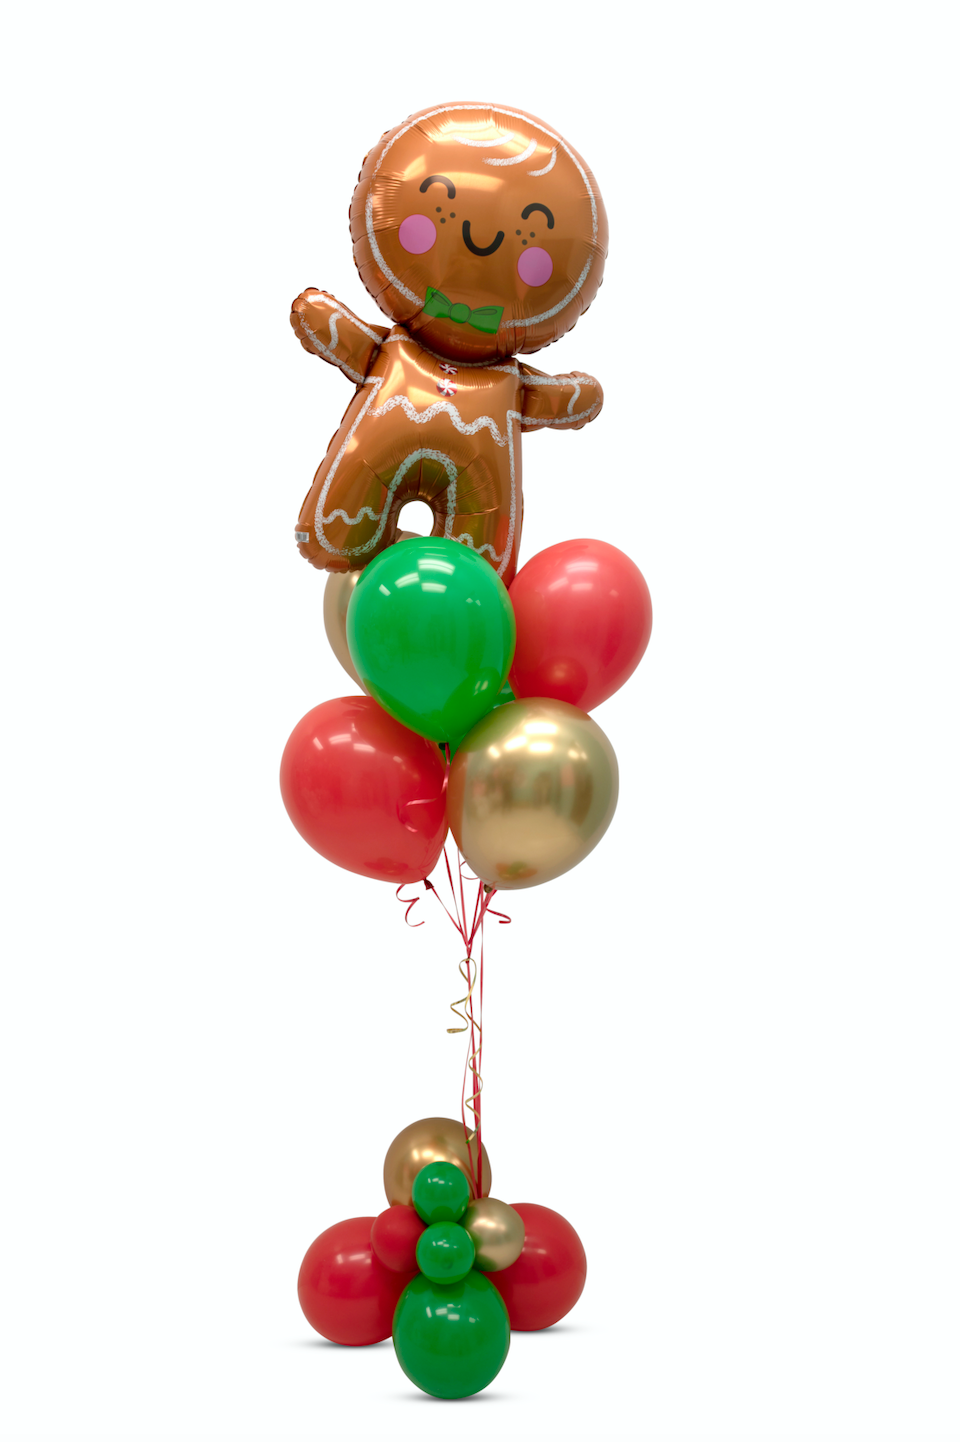 Gingerbread balloons